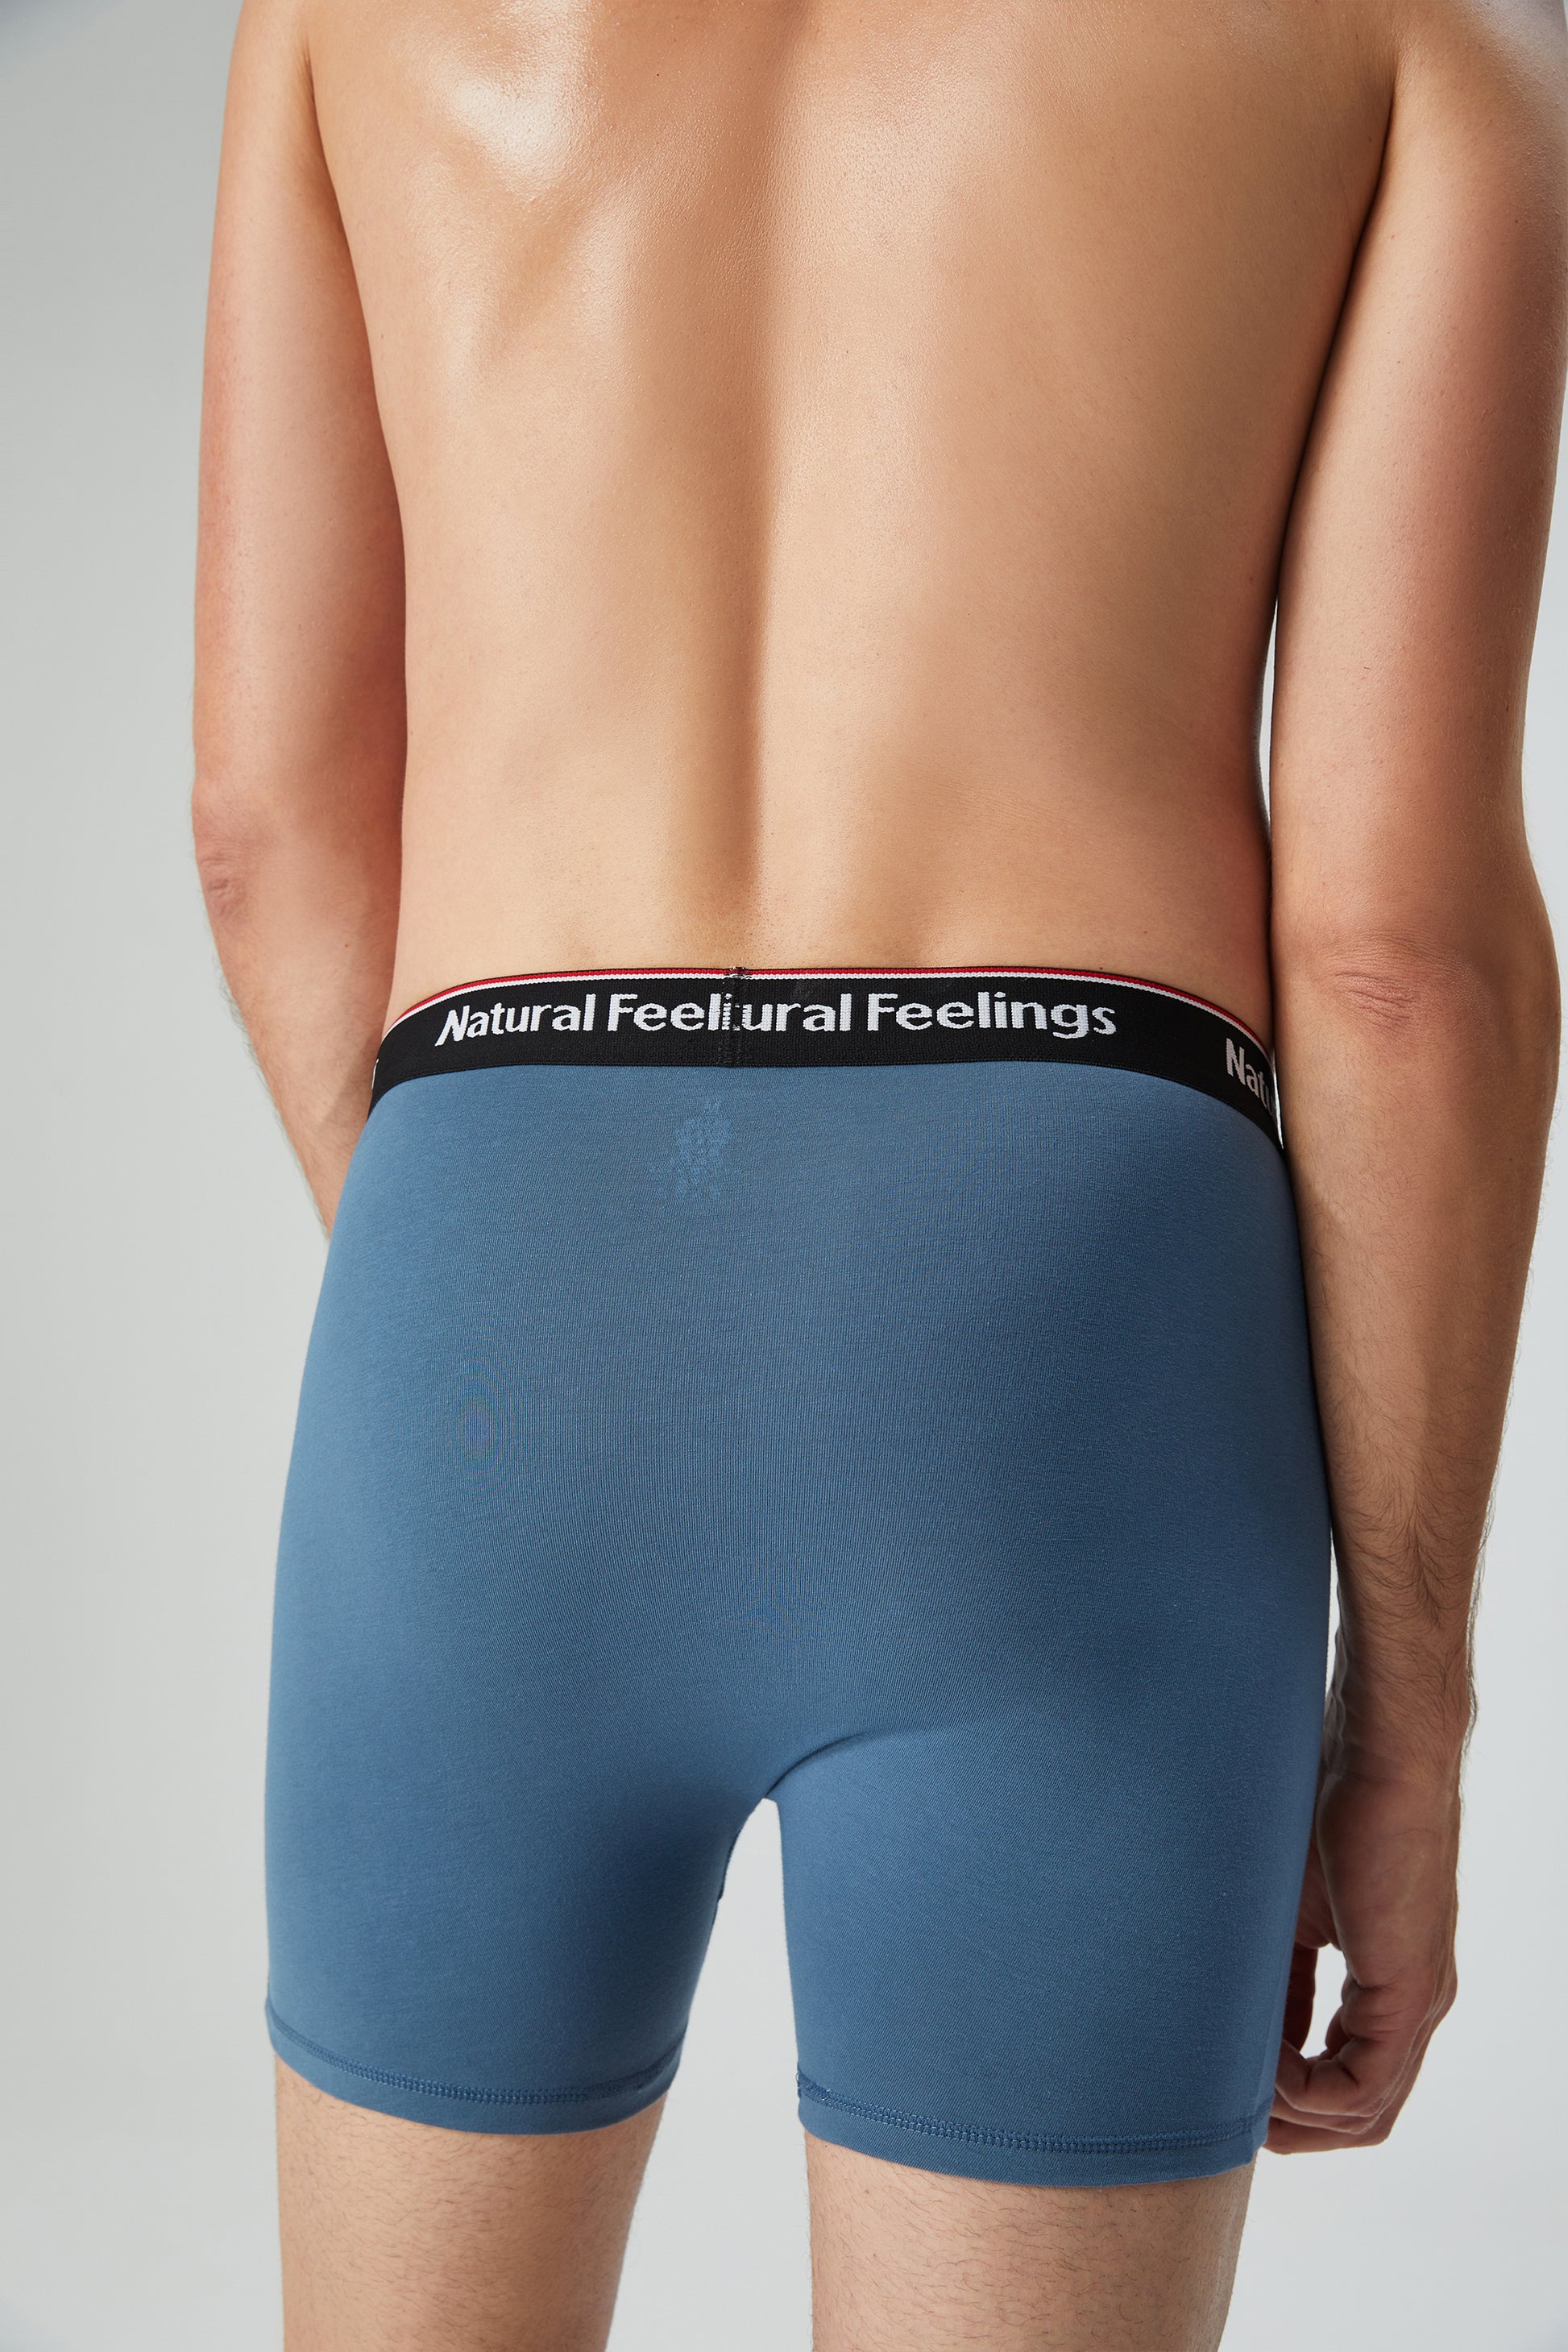 Natural Feelings Men's 6 Underwear Boxer Briefs Modal Boxer Briefs for Men  Open Fly Underwear Mens 4-Pack S-XXL, C: 4 Pairs Modal 6 in Boxer Briefs, S  : : Fashion